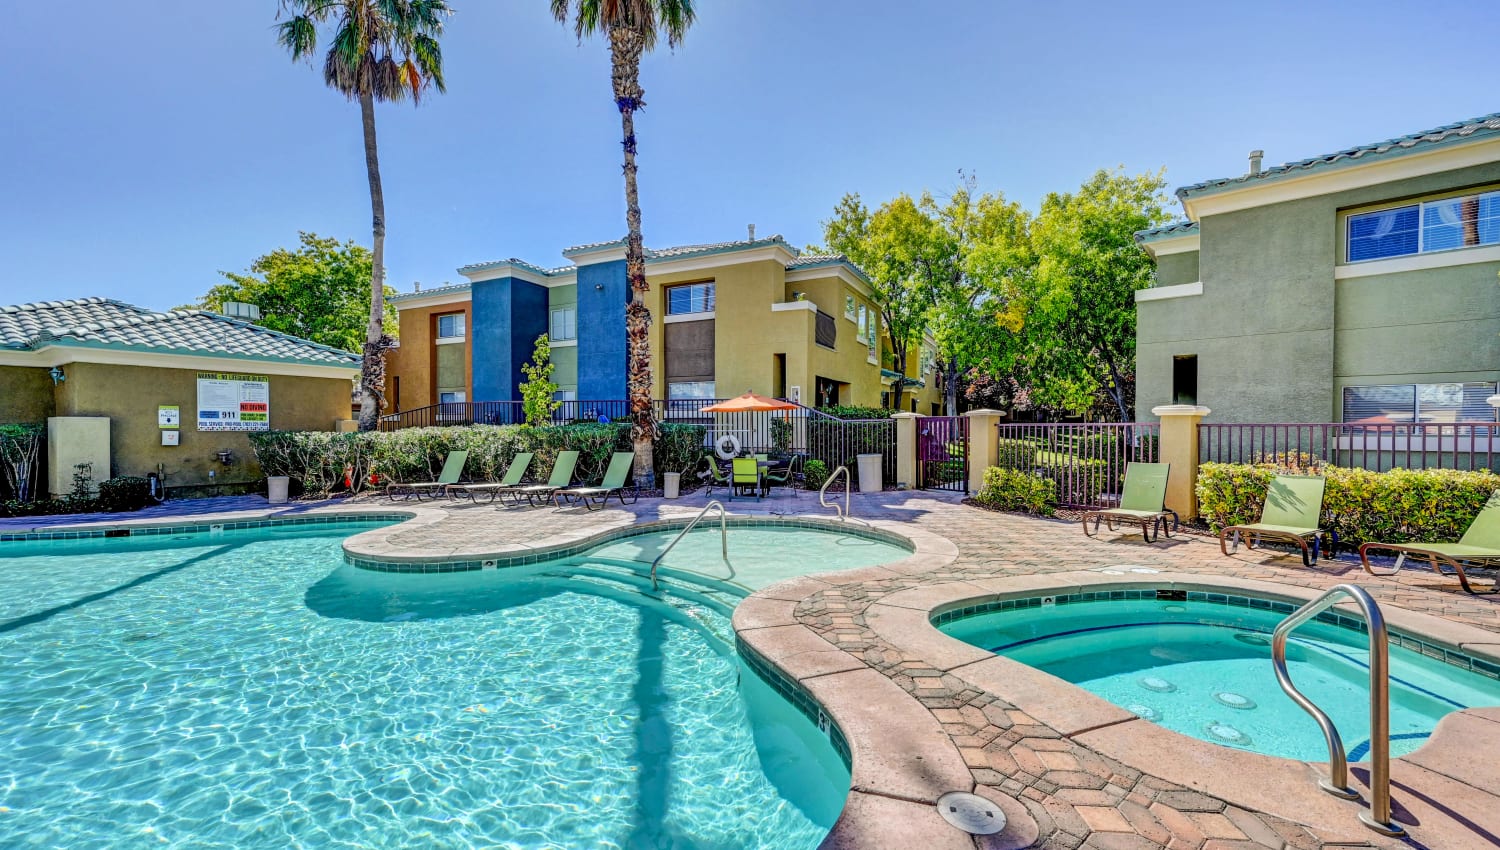 Resort-style pool and spa at Horizon Ridge Apartments in Henderson, Nevada